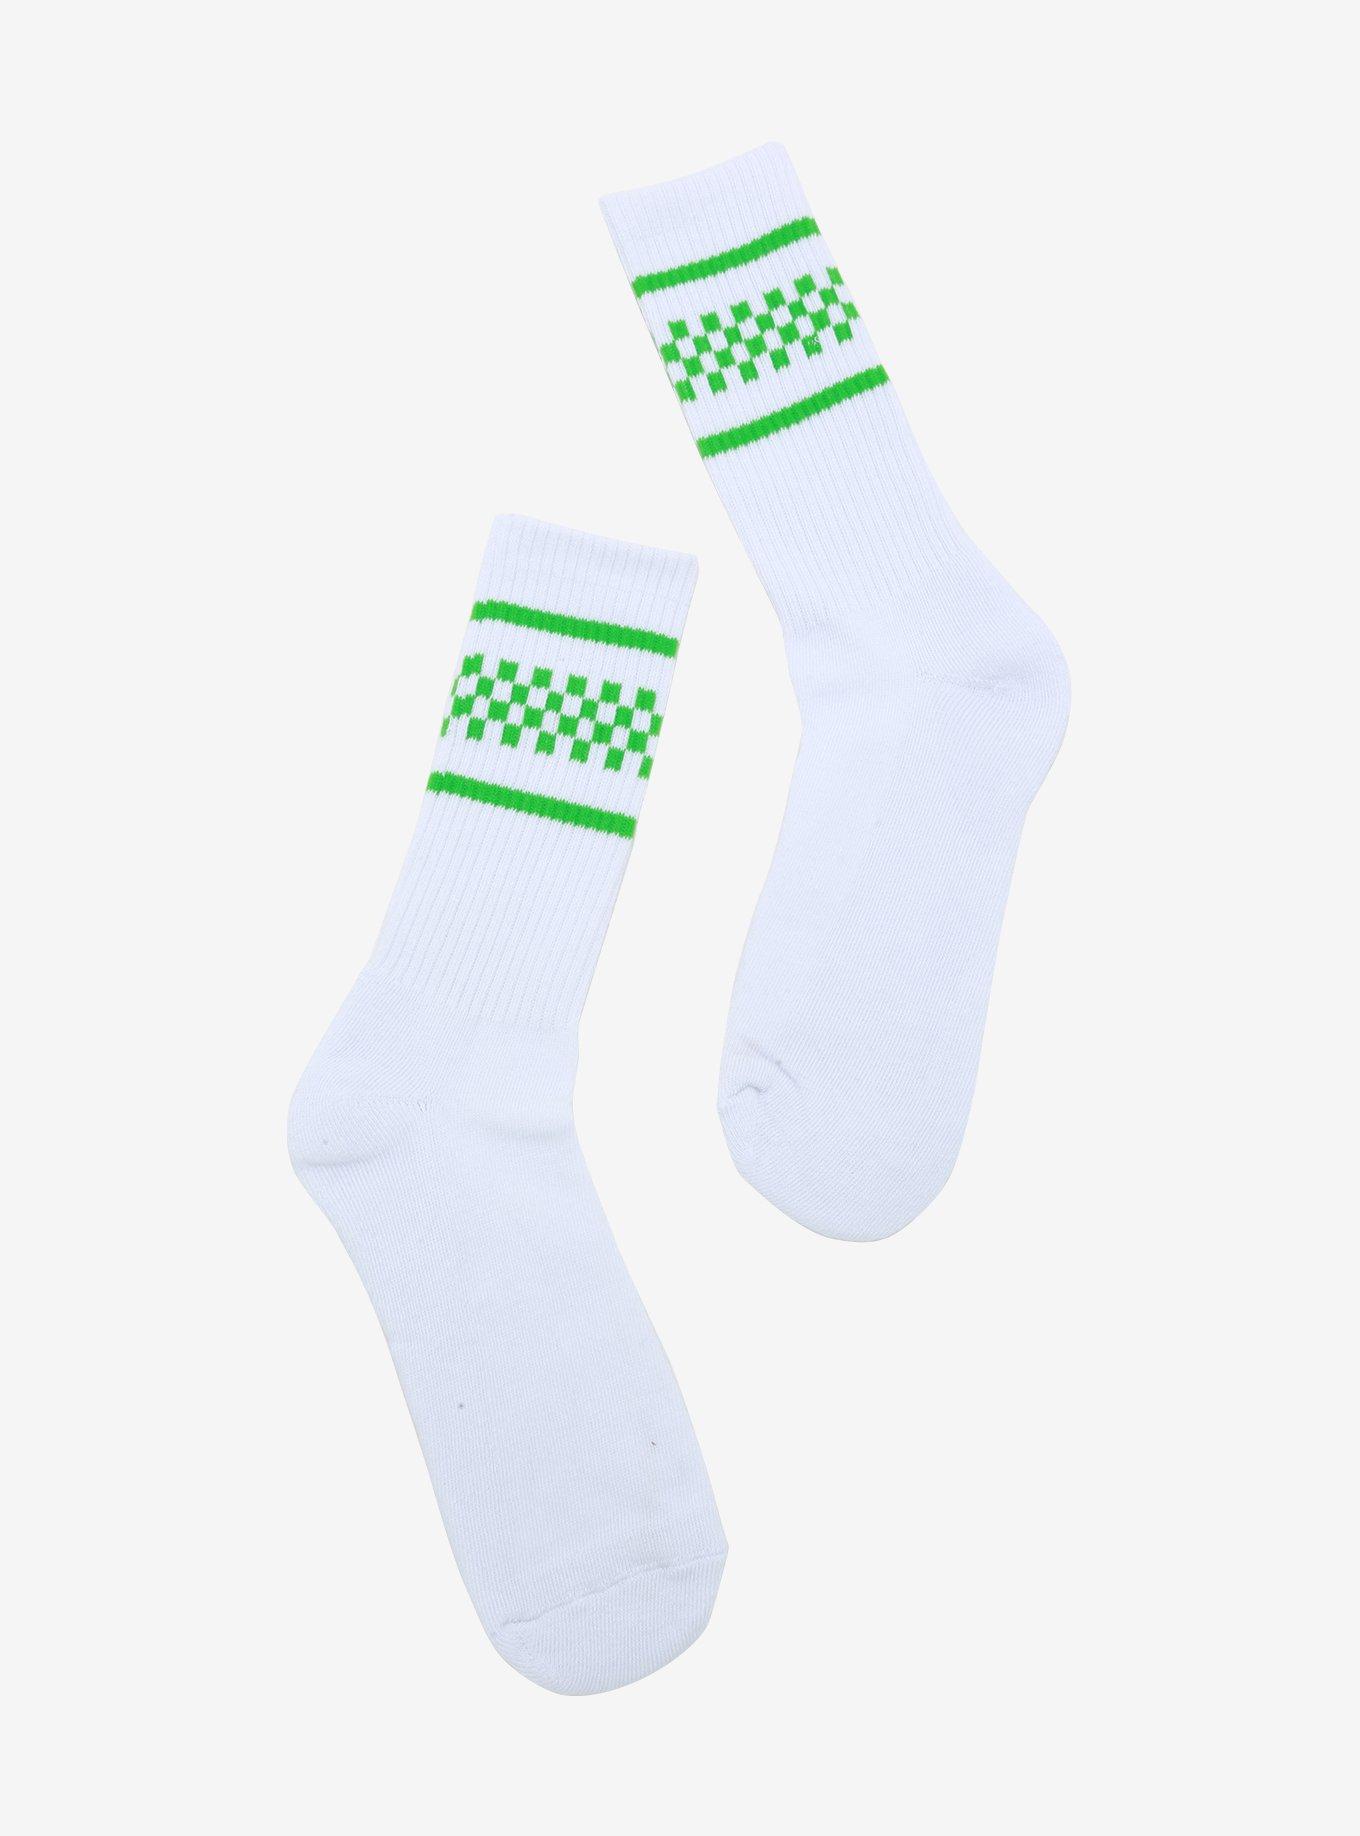 Green & White Checkered Crew Socks, , hi-res